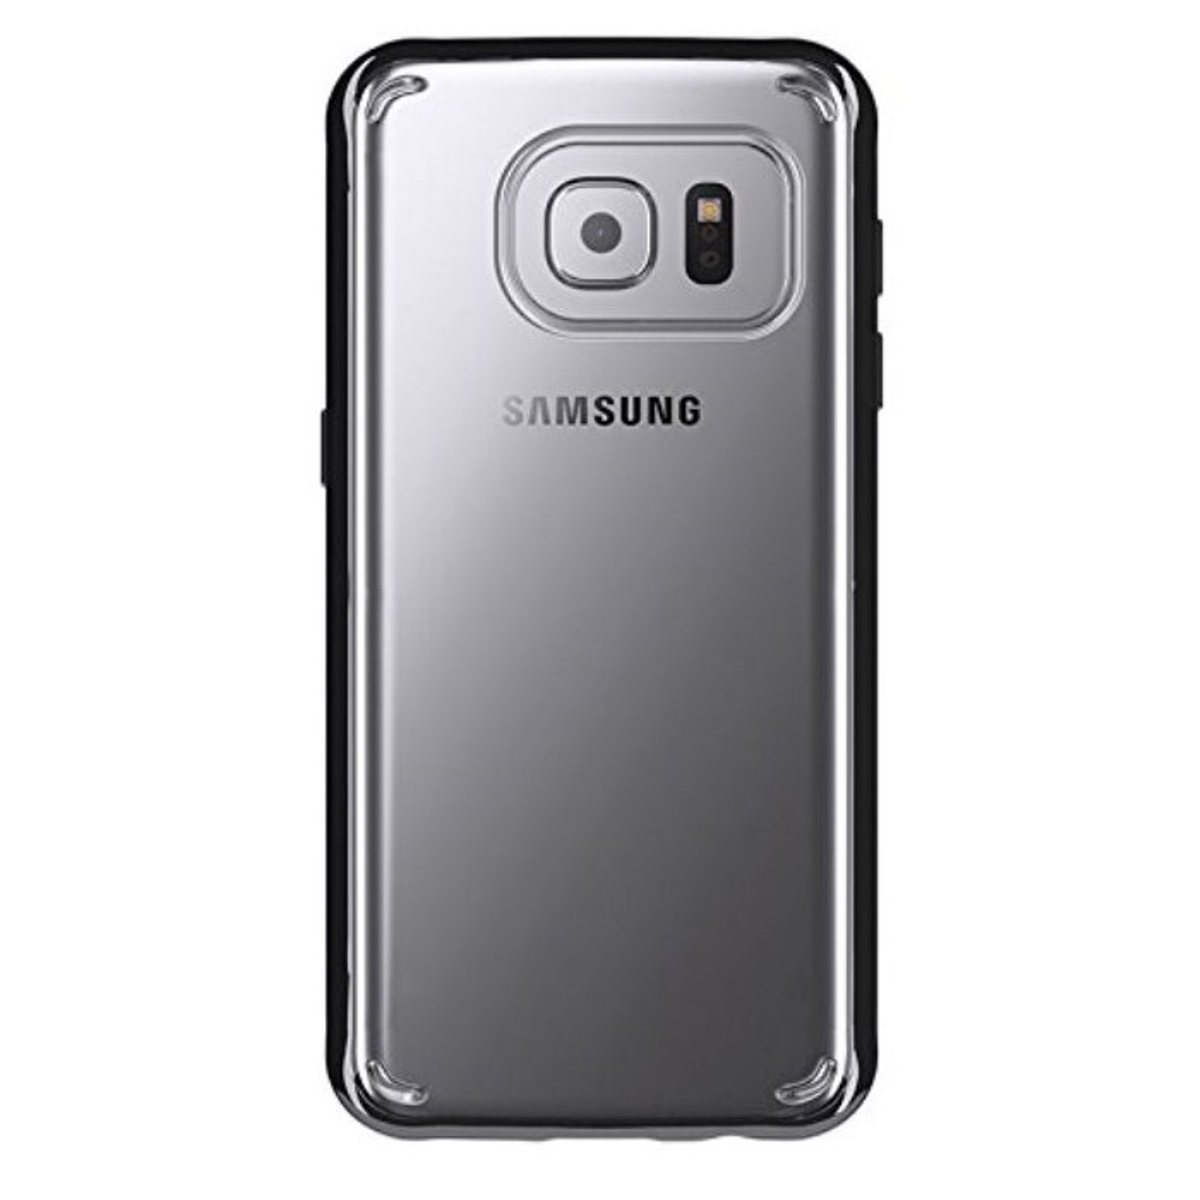 Reveal, Klar Backcover, Case Back Samsung, Galaxy S7, Schwarz GRIFFIN